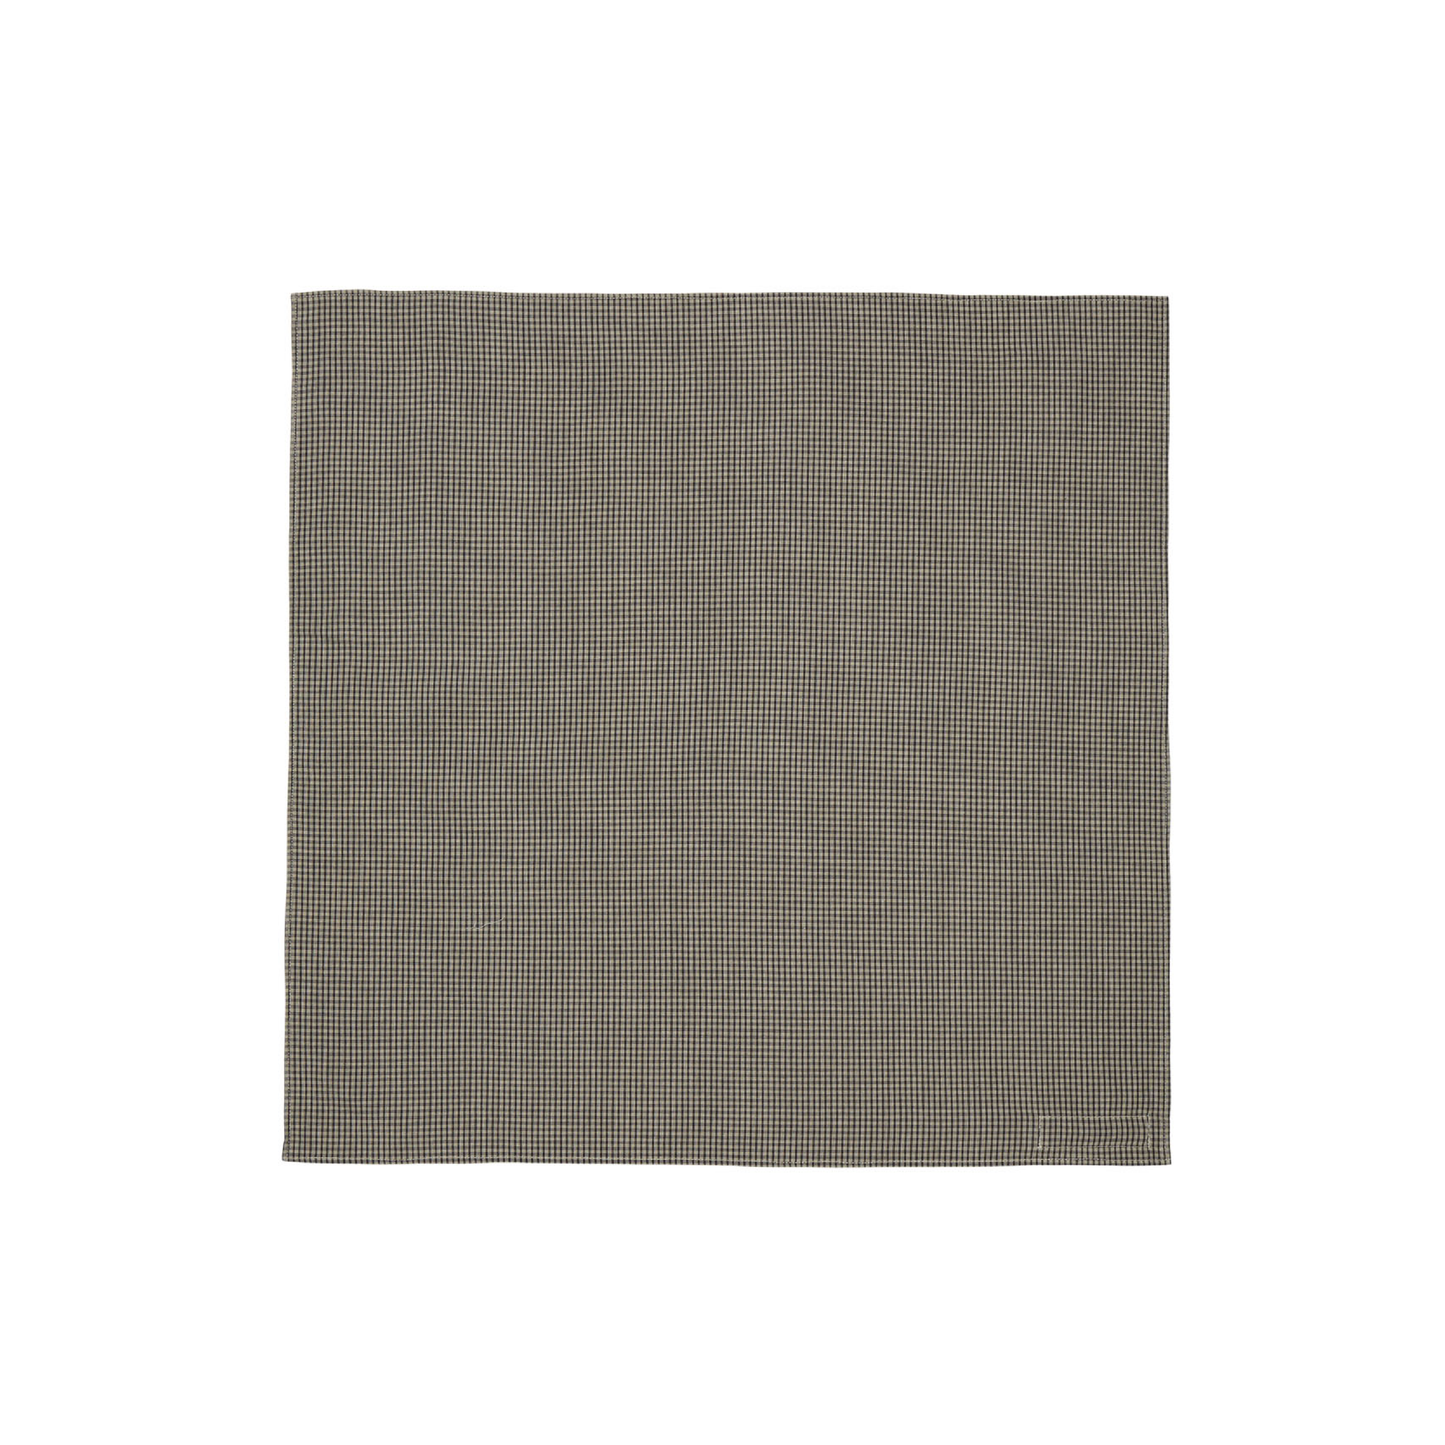 Skall Scarf, Beige/Grey Mini Check (55x55 cm)